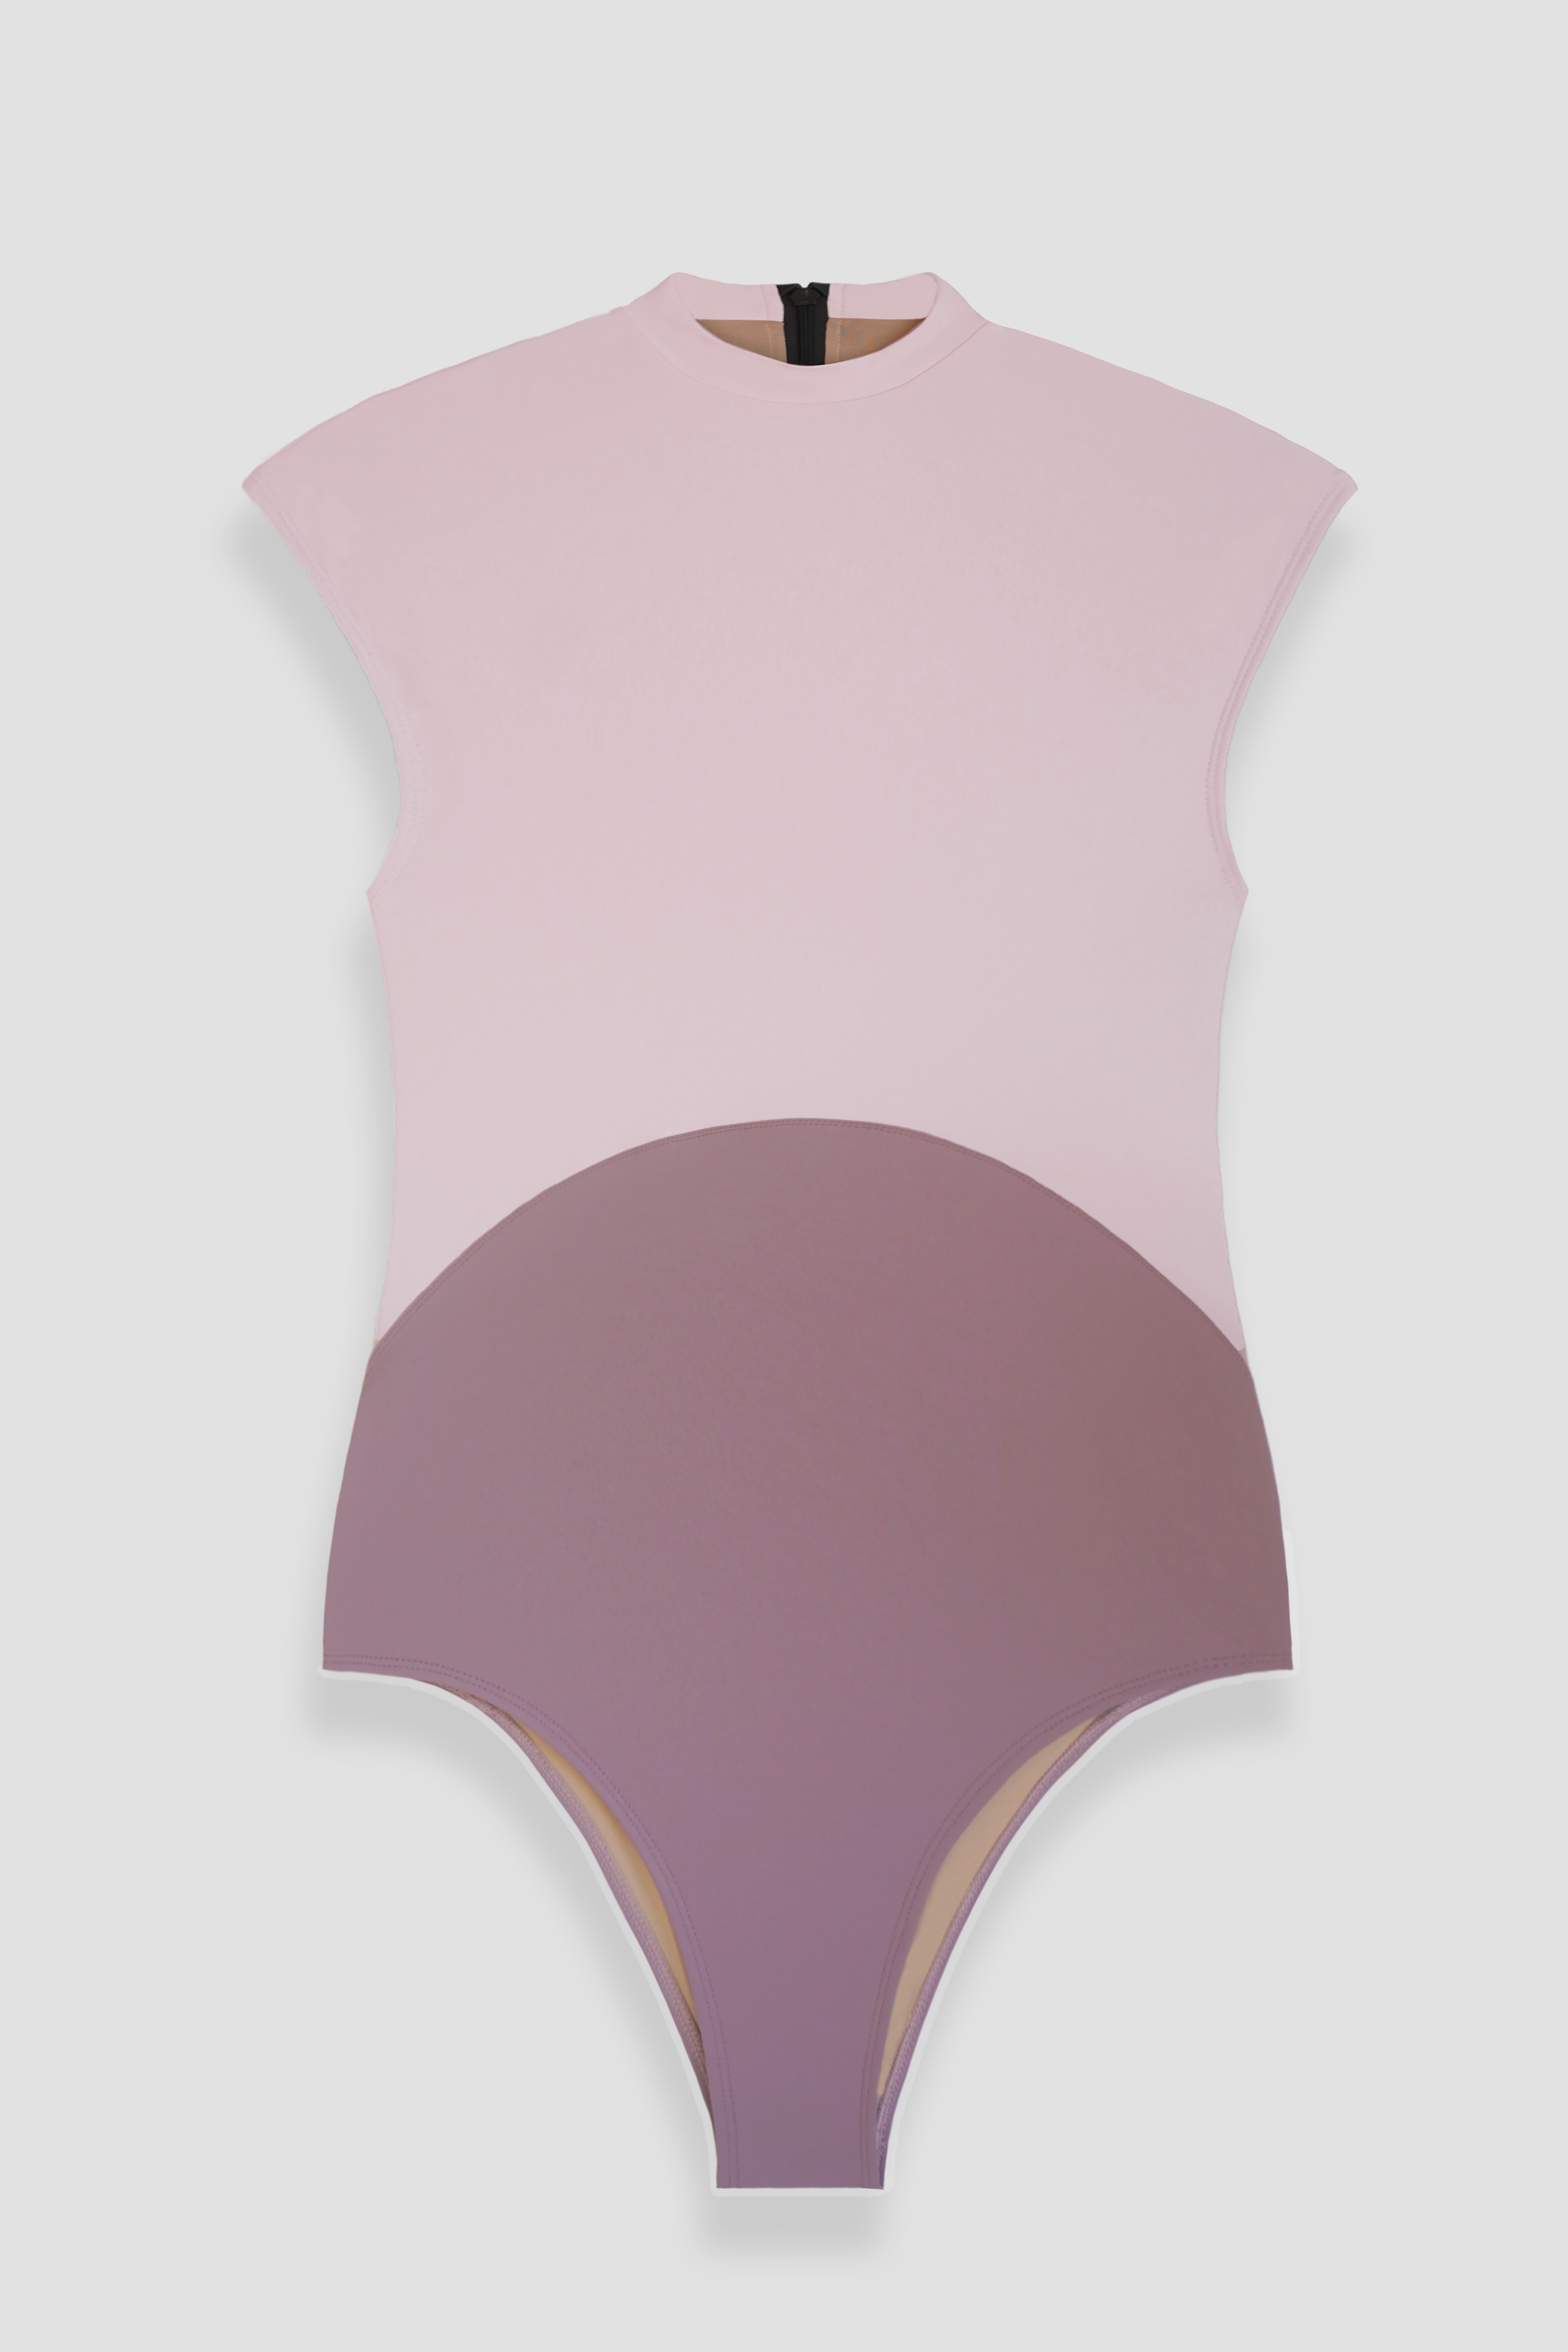 Marosi Surf Swimsuit Onepiece in Nude & Mauve